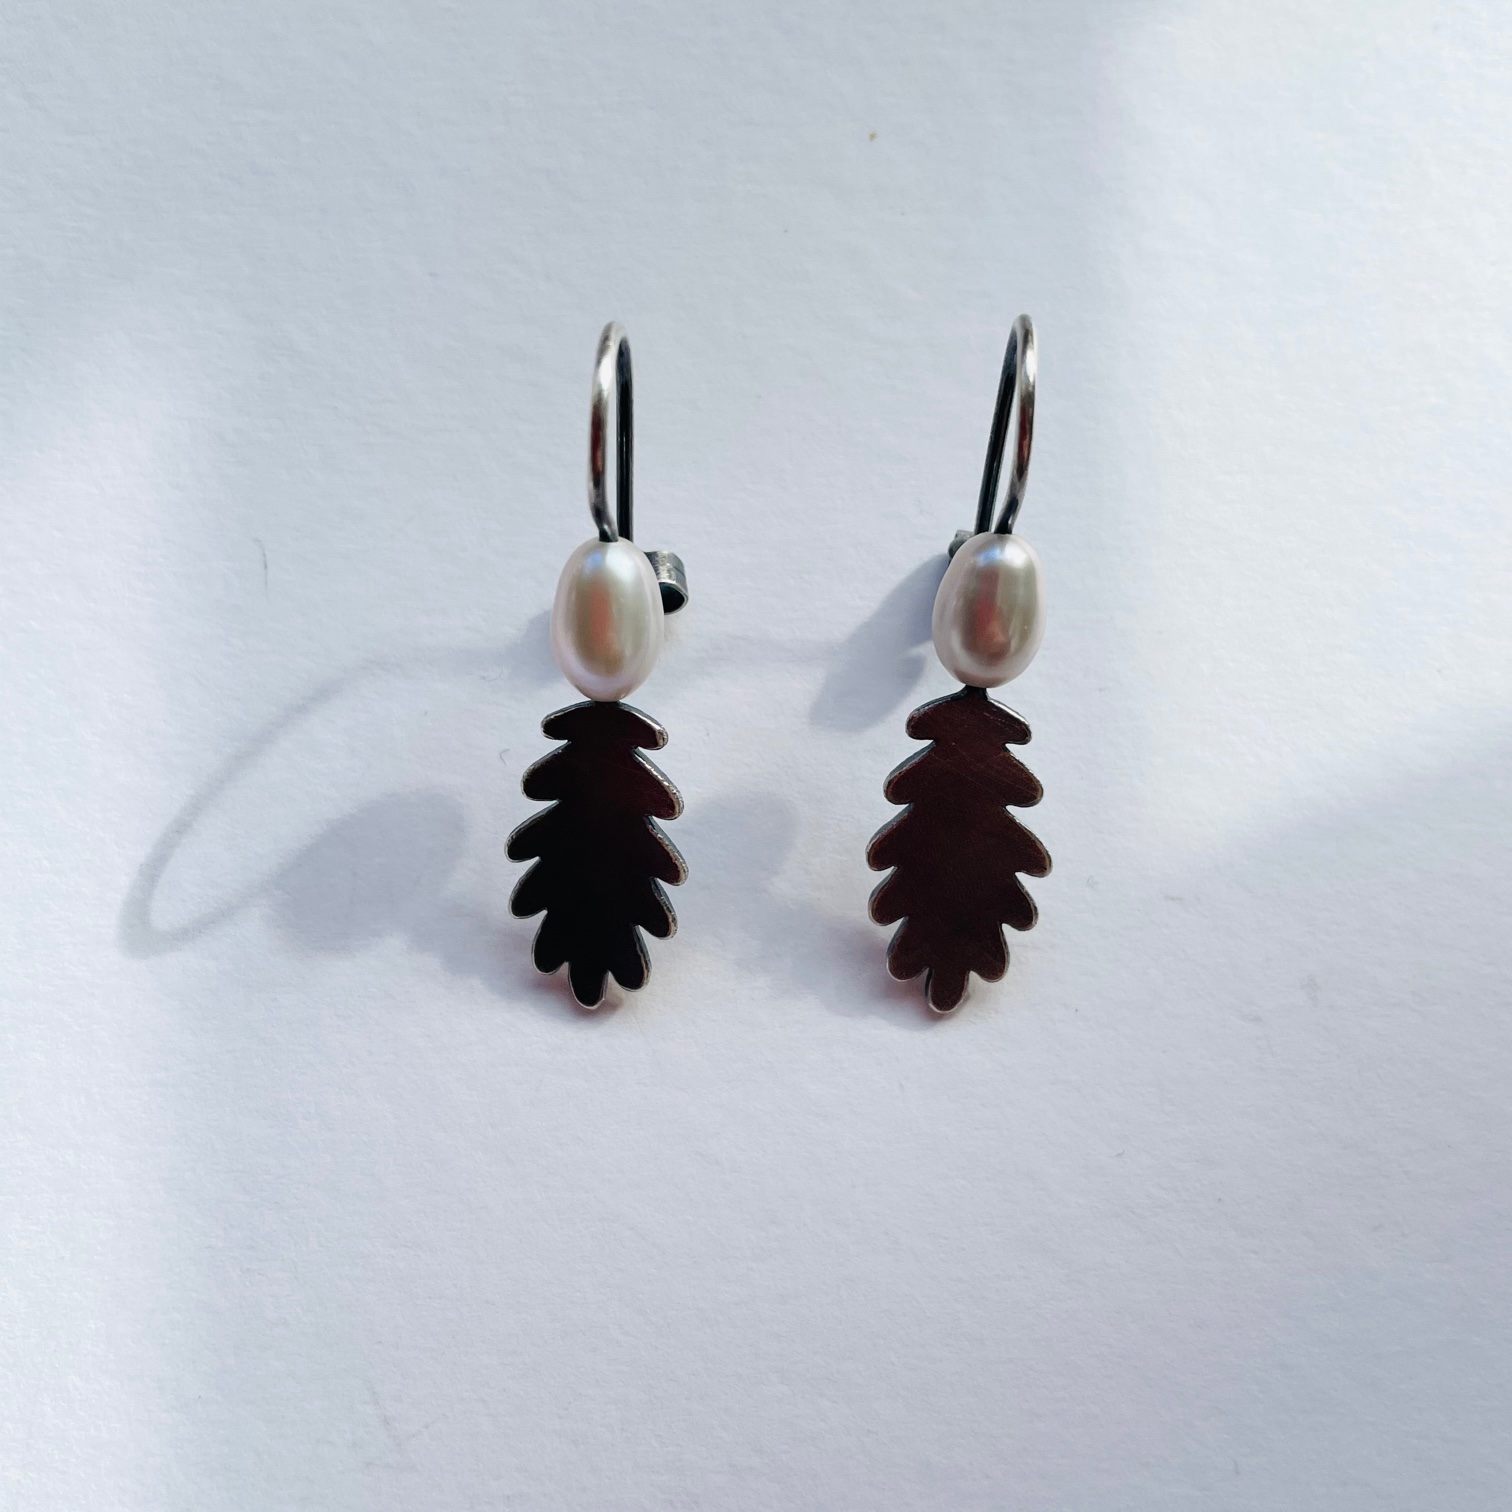 Oak leaf and pearl earrings by Suzanne Potter of Siskin Jewellery